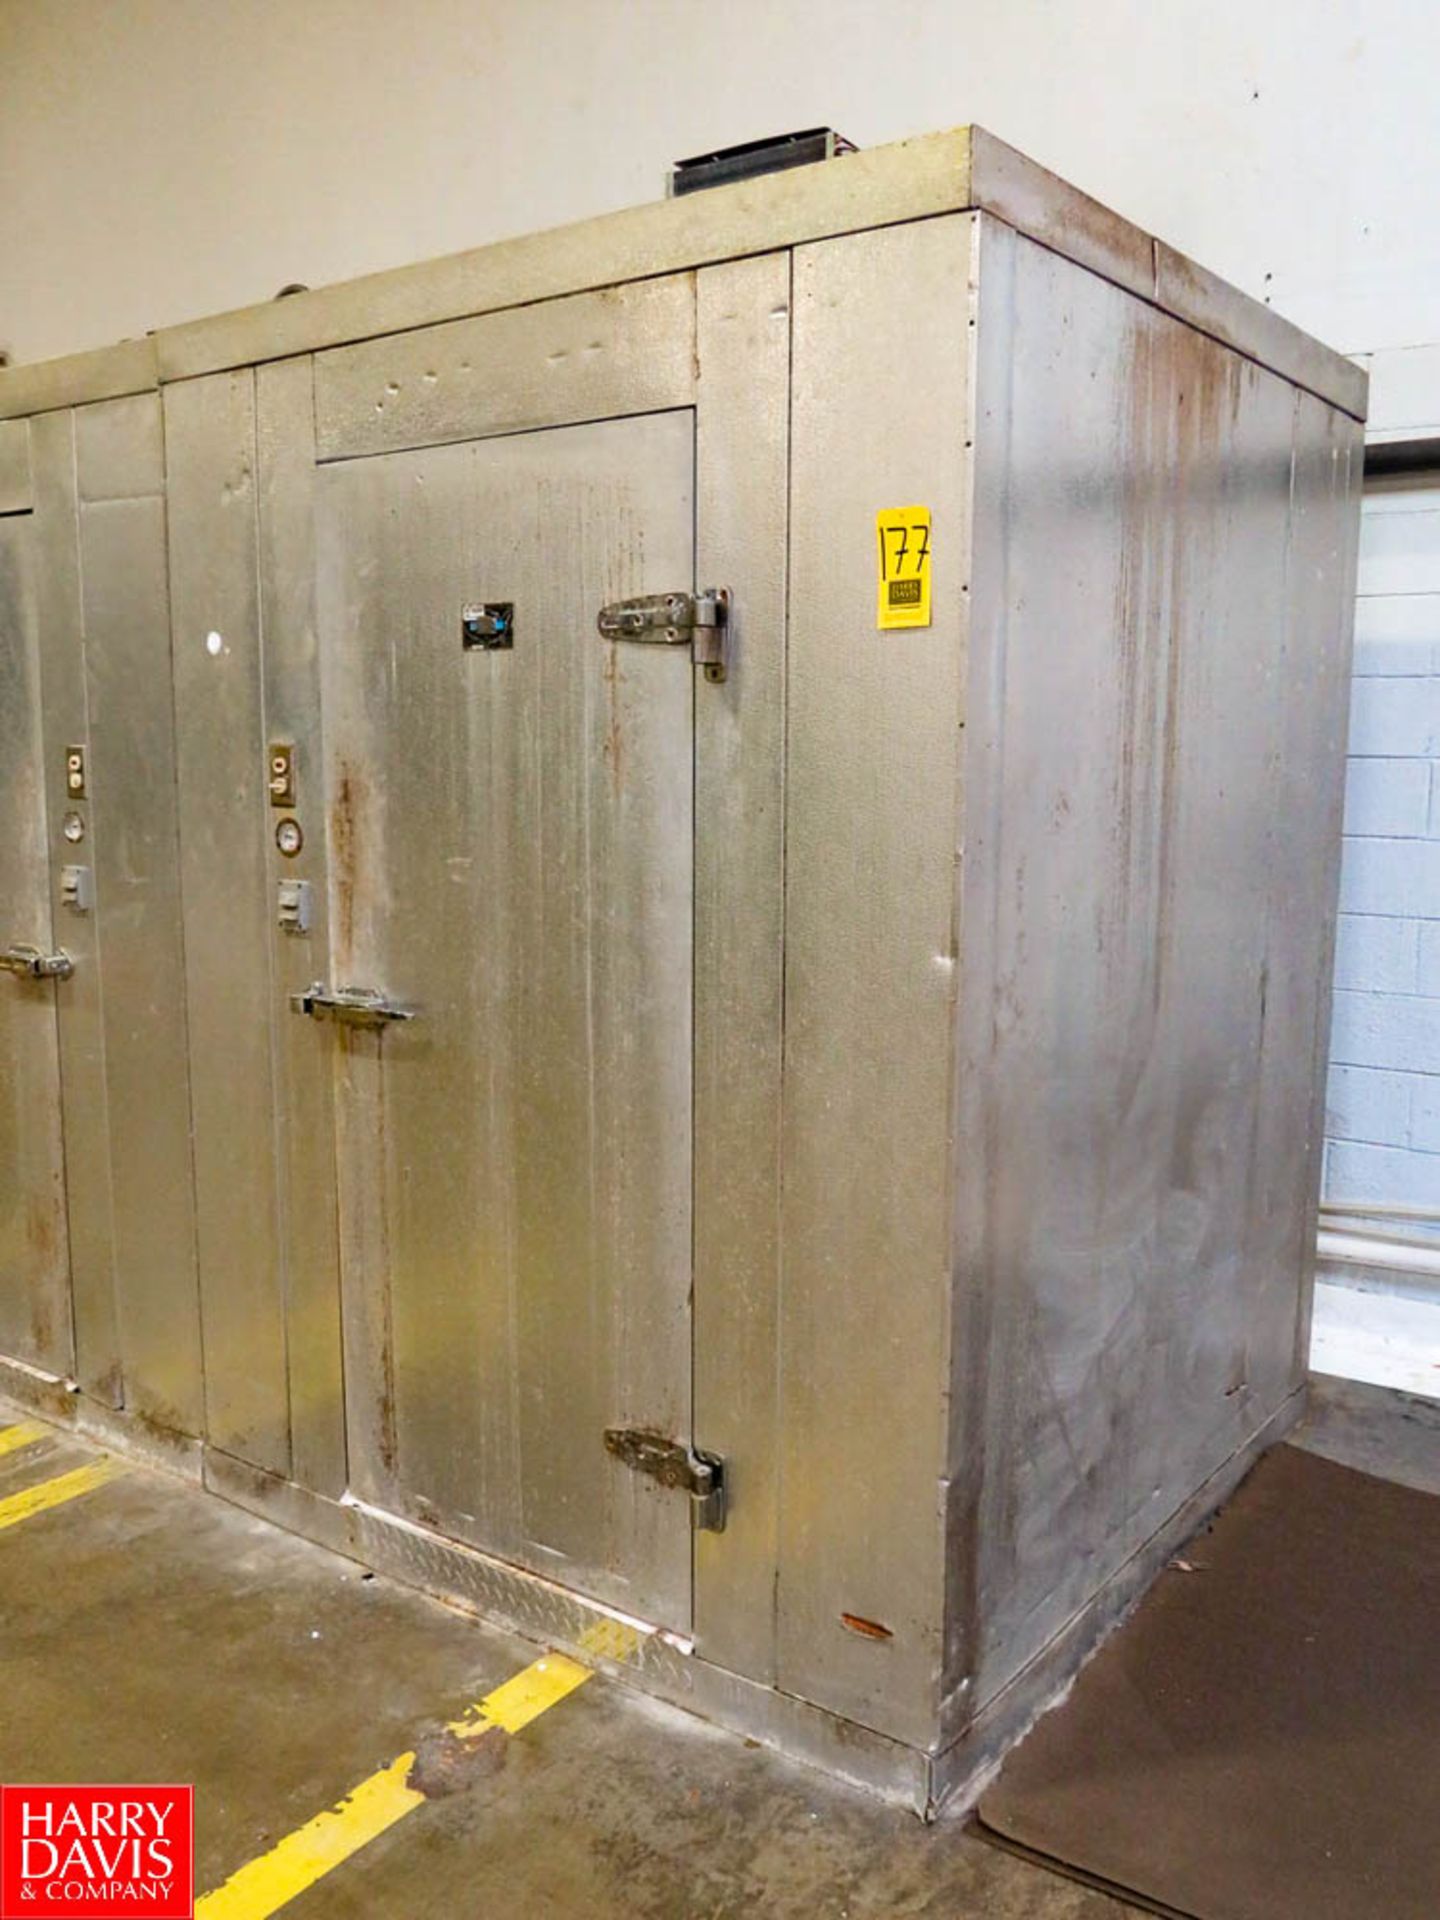 American Cold Storage Walk In Freezer 6' X 5' 8" X 7' 8", S/N 1121 Rigging Fee: $900